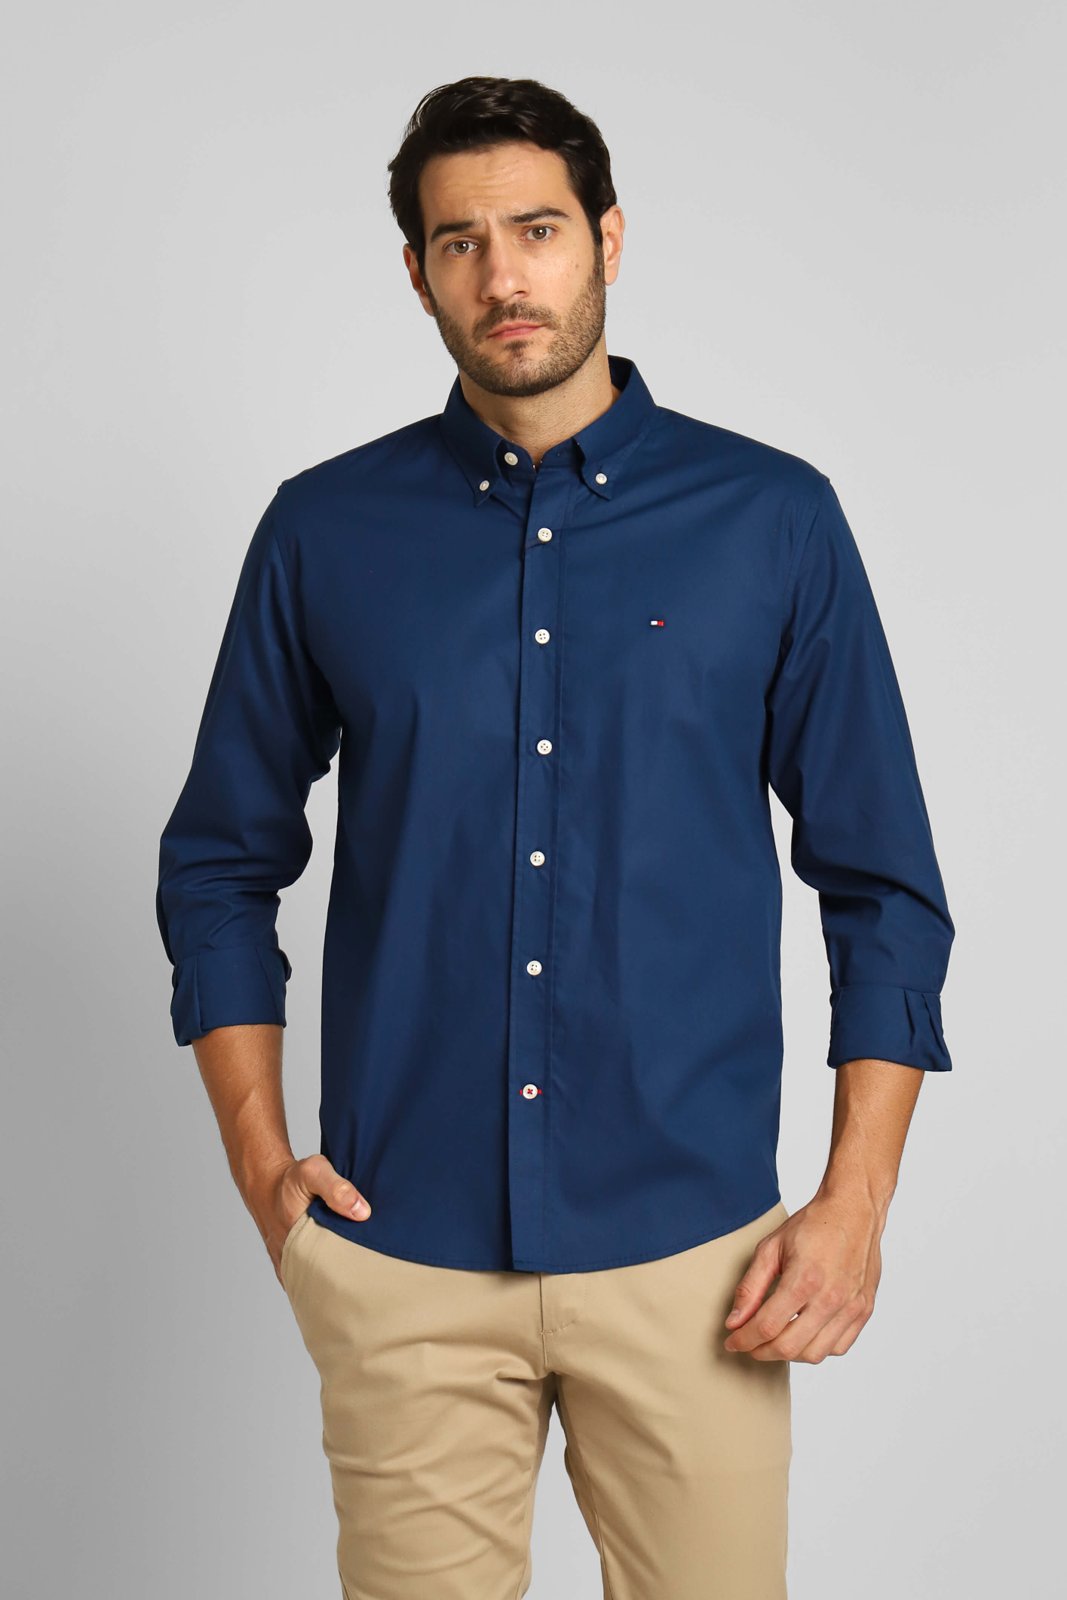 Camisa Tommy Hilfiger Masculina Azul ML 04